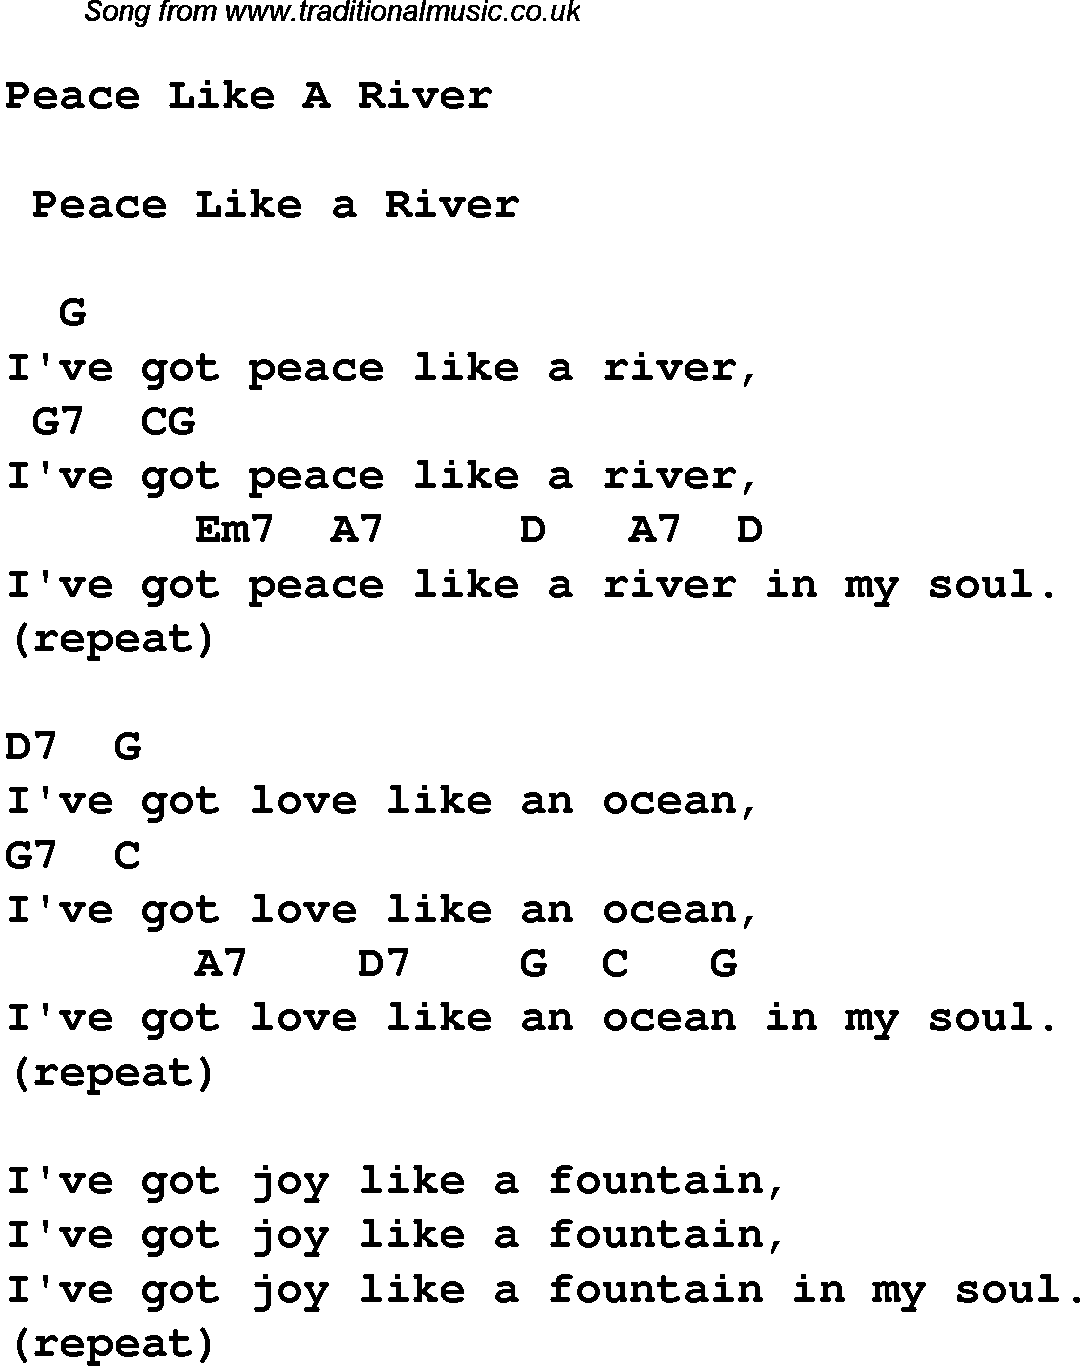 Gospel Song: peace-like-a-river, lyrics and chords.